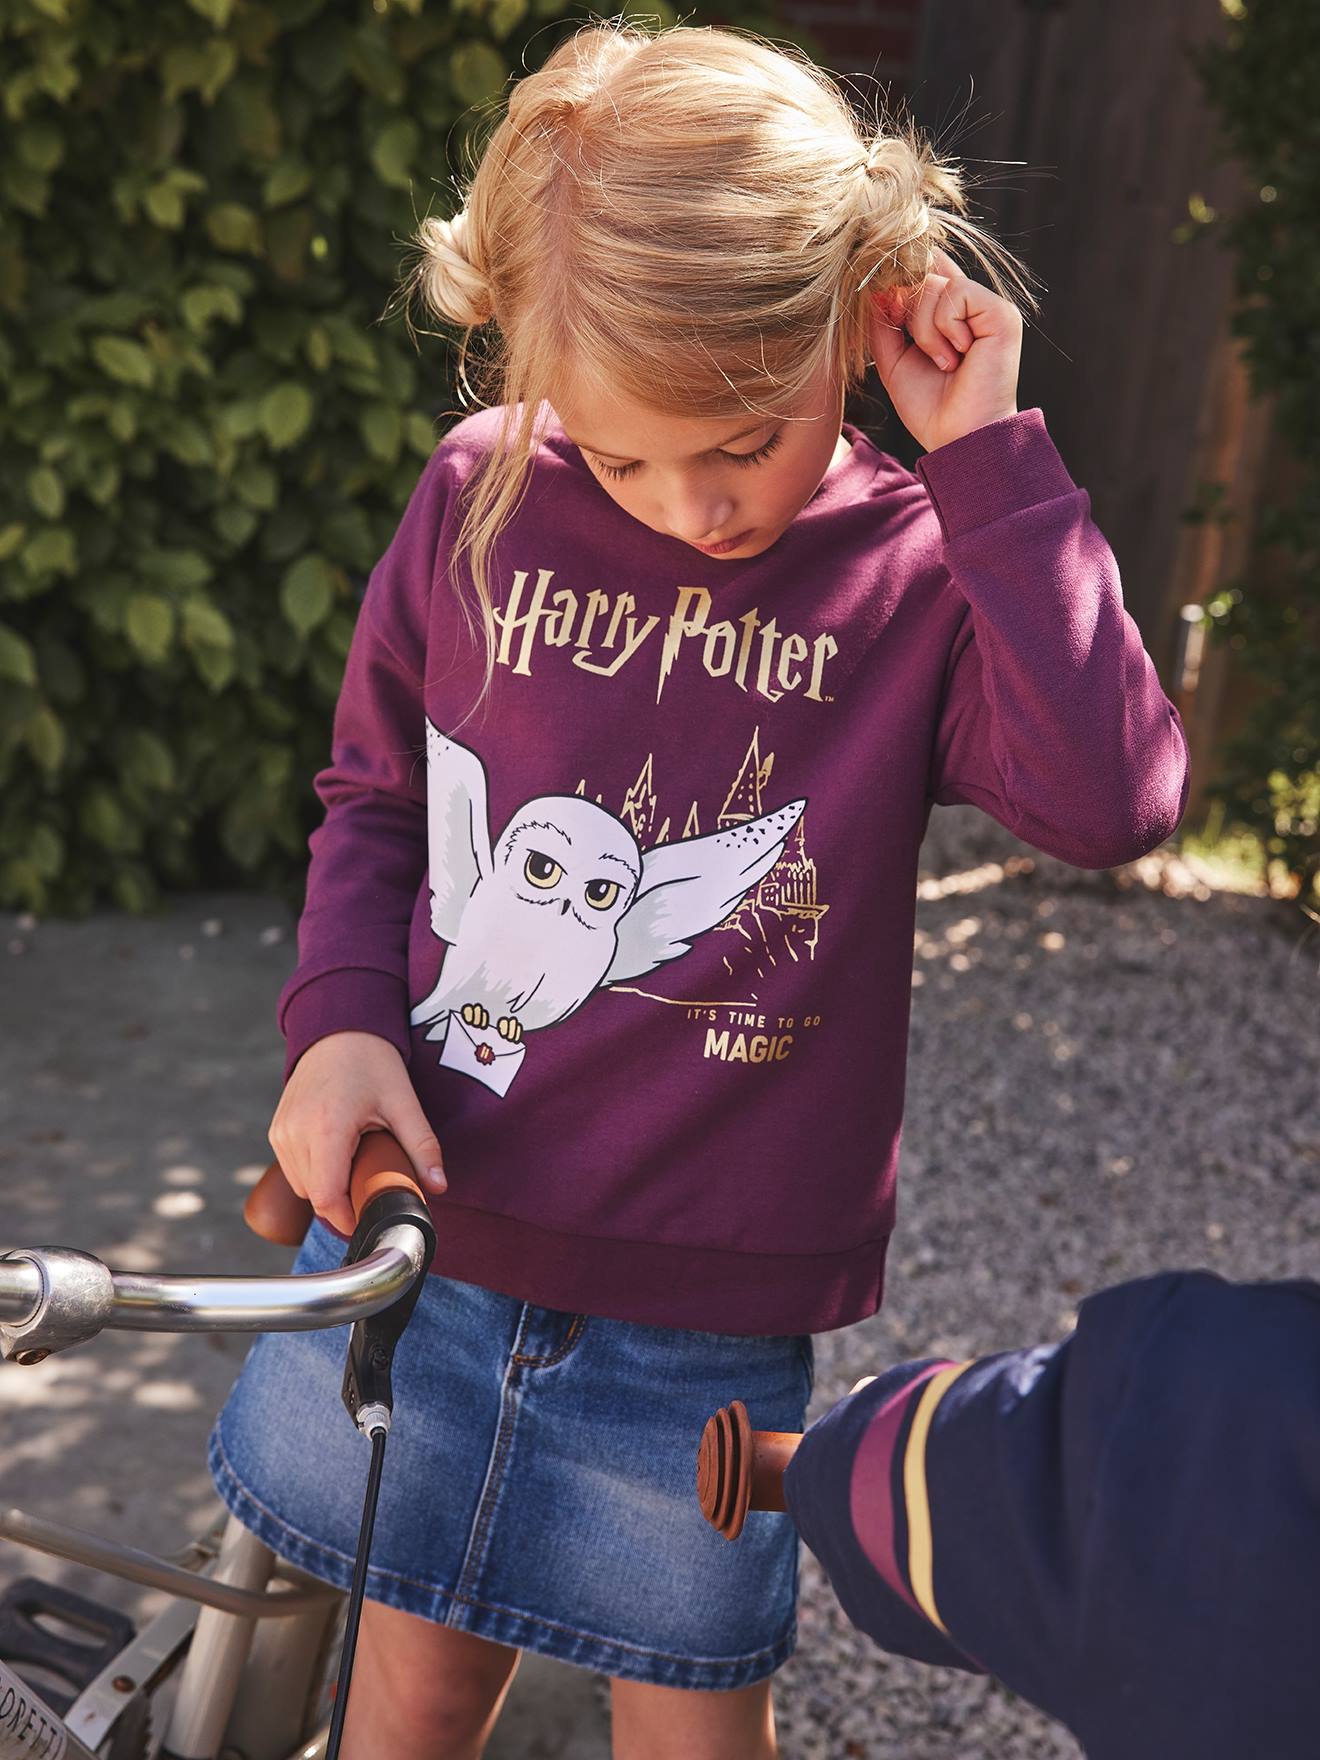 Harry Potter(r) Sweatshirt for Girls purple dark solid with design